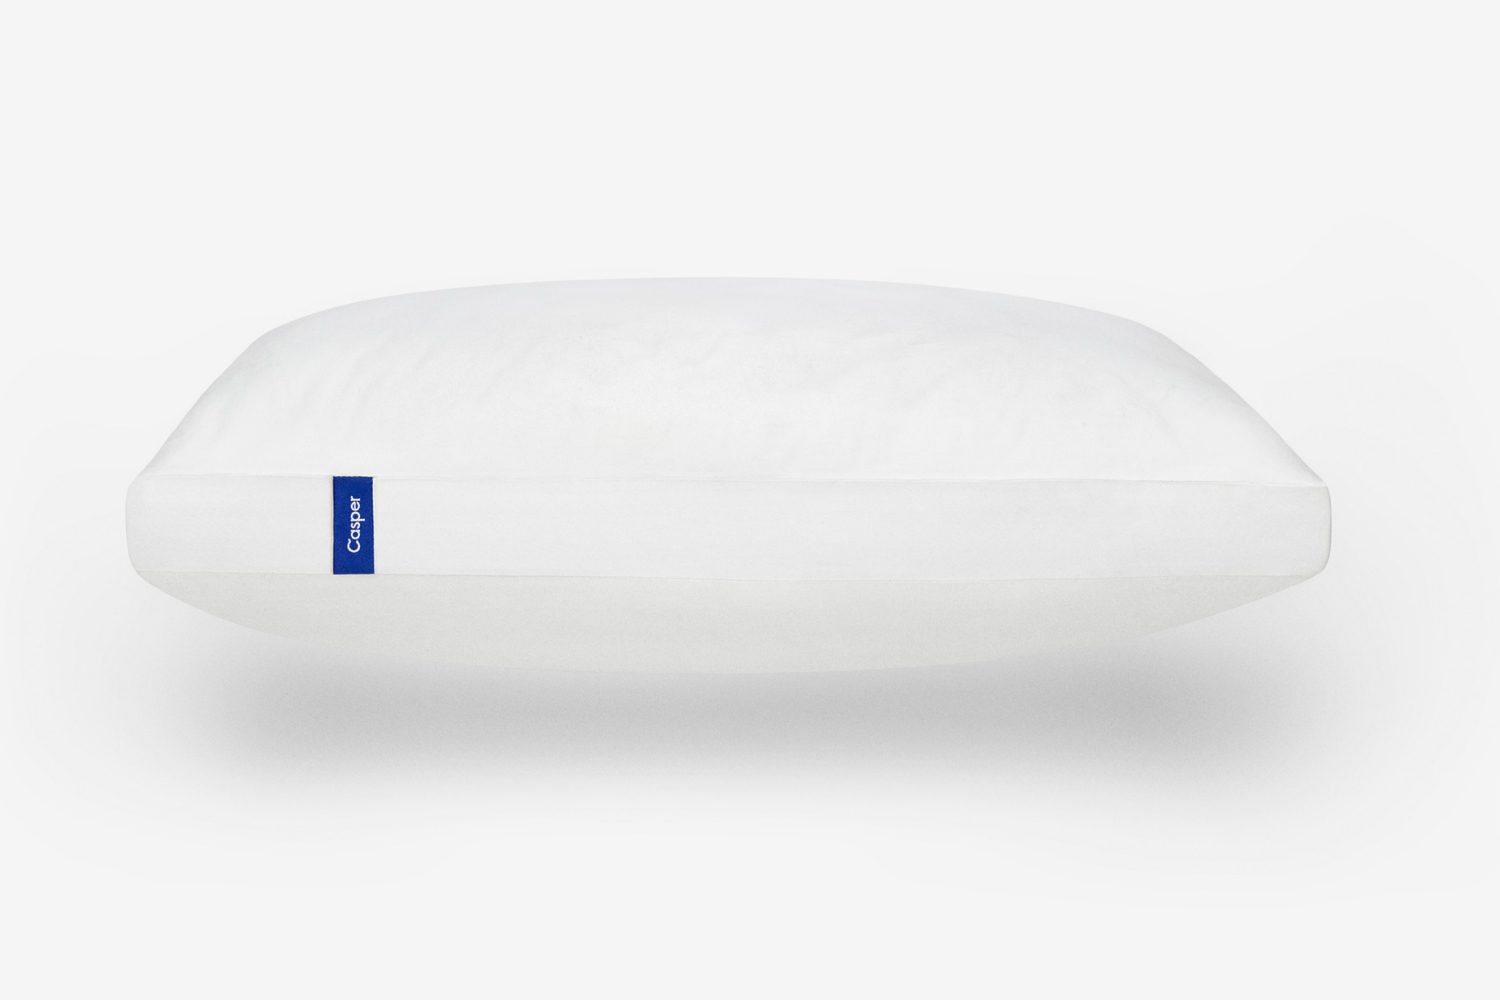 mattress company casper now sells sheets and pillows pillow